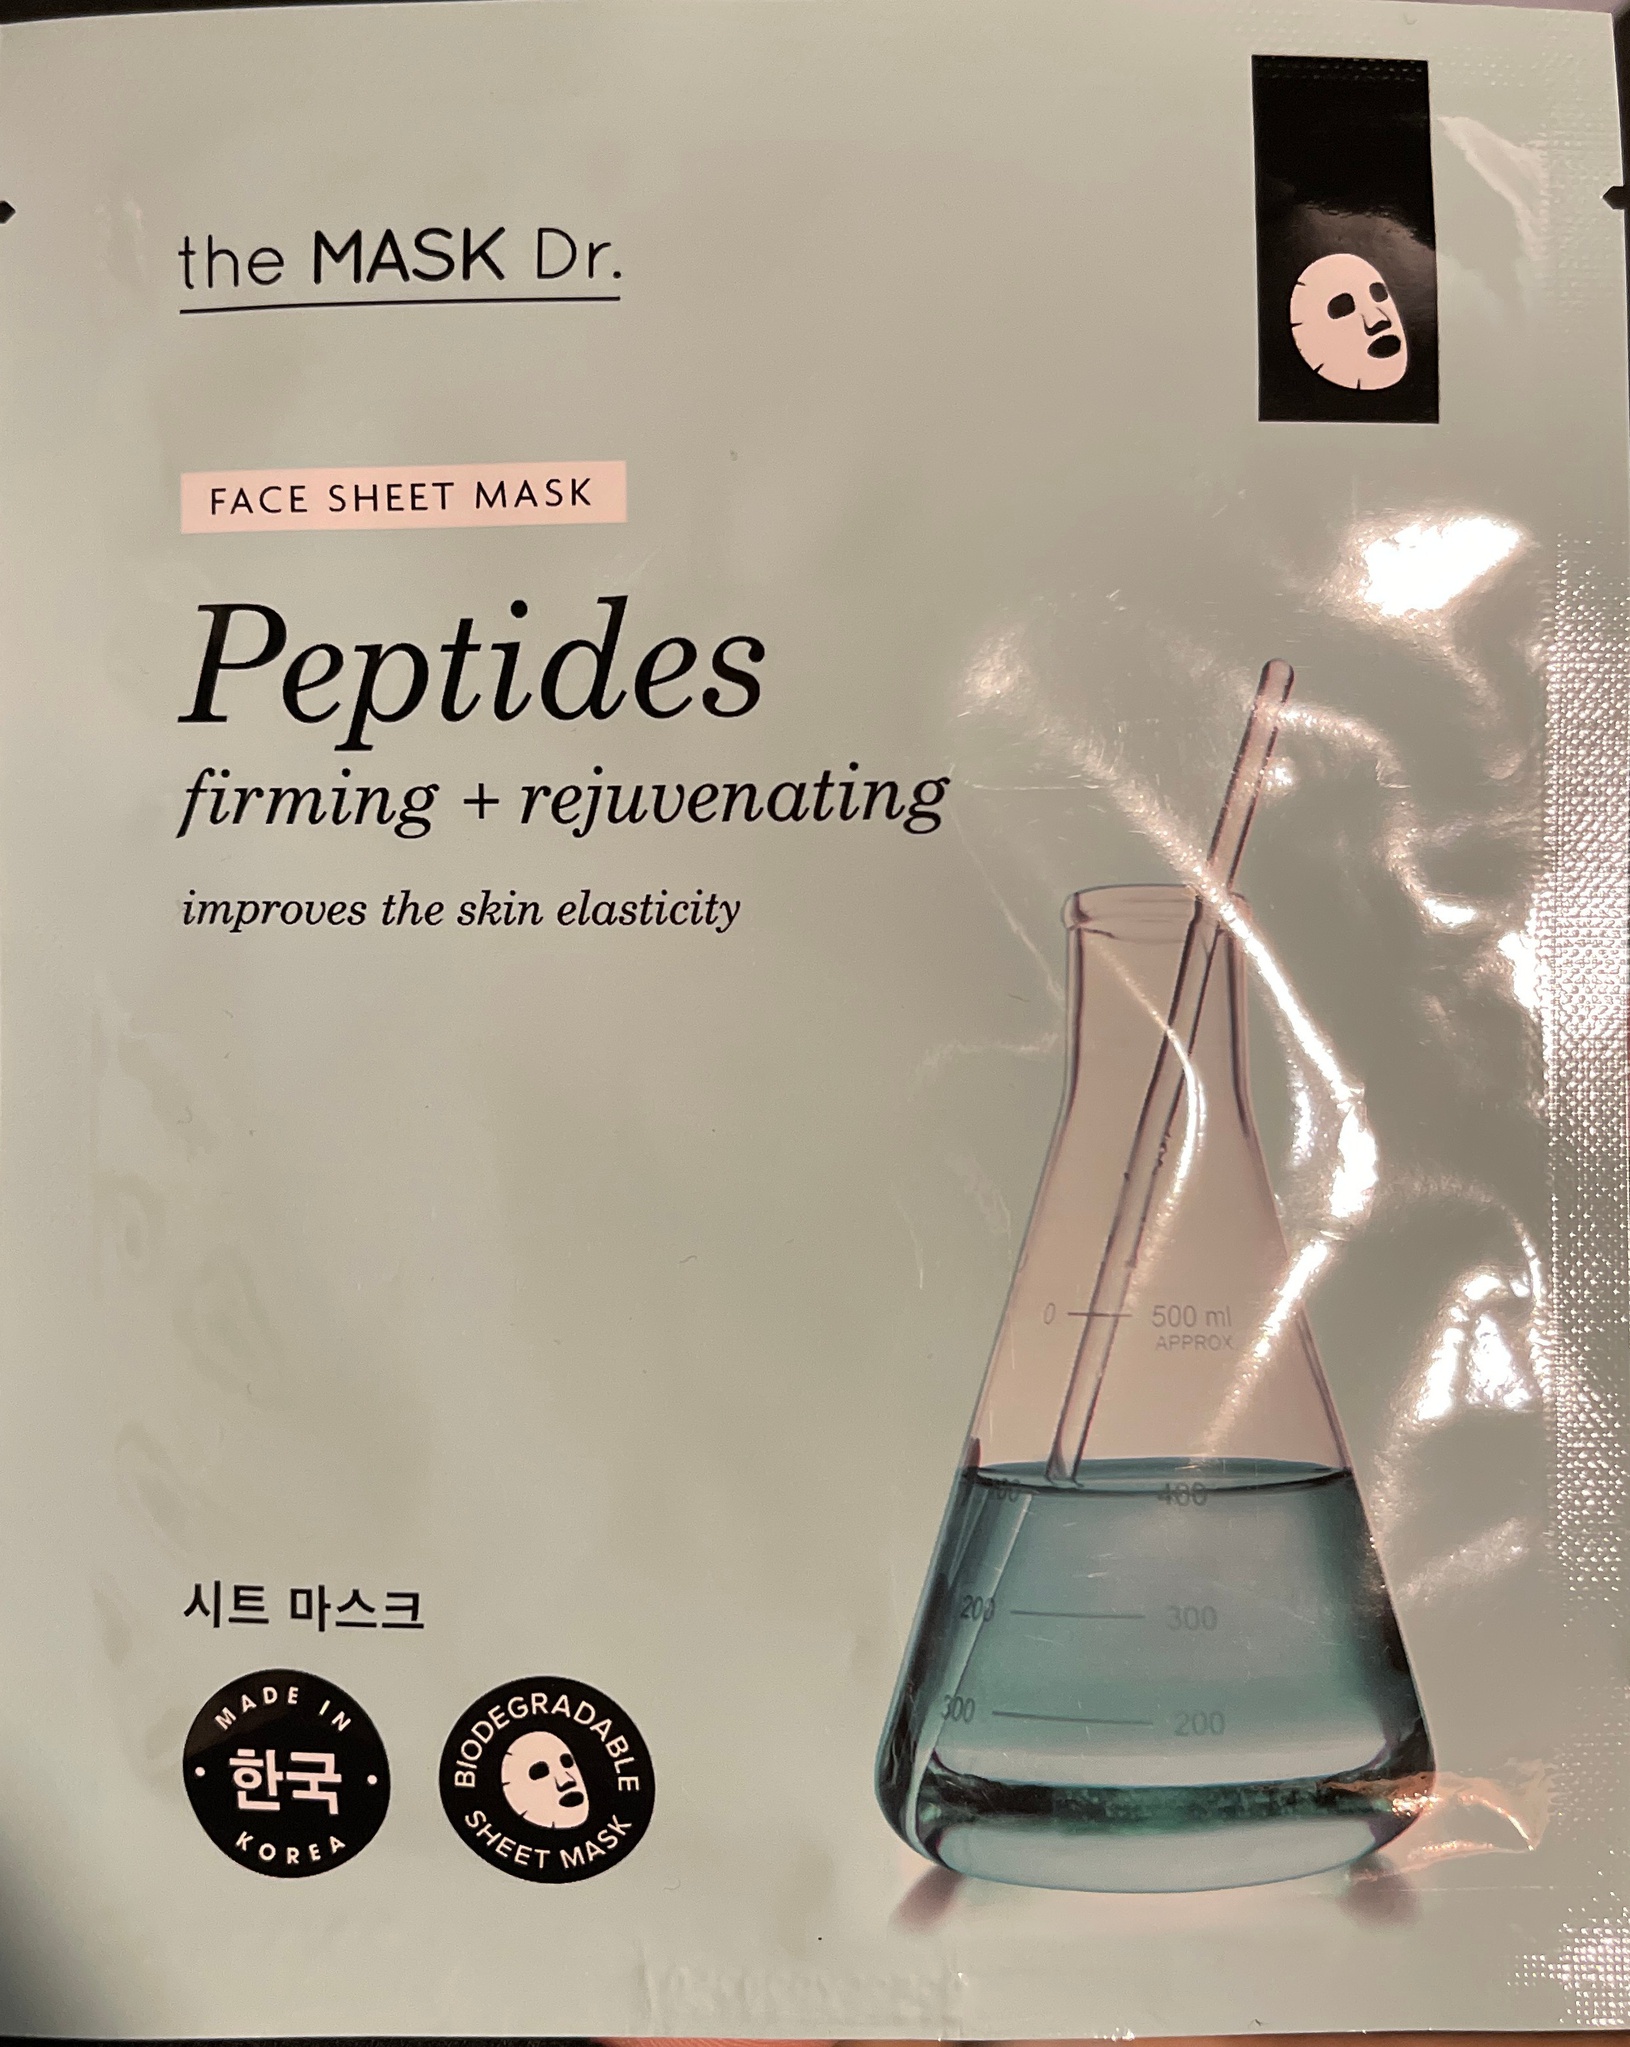 the mask dr. Face Sheet Mask Peptides